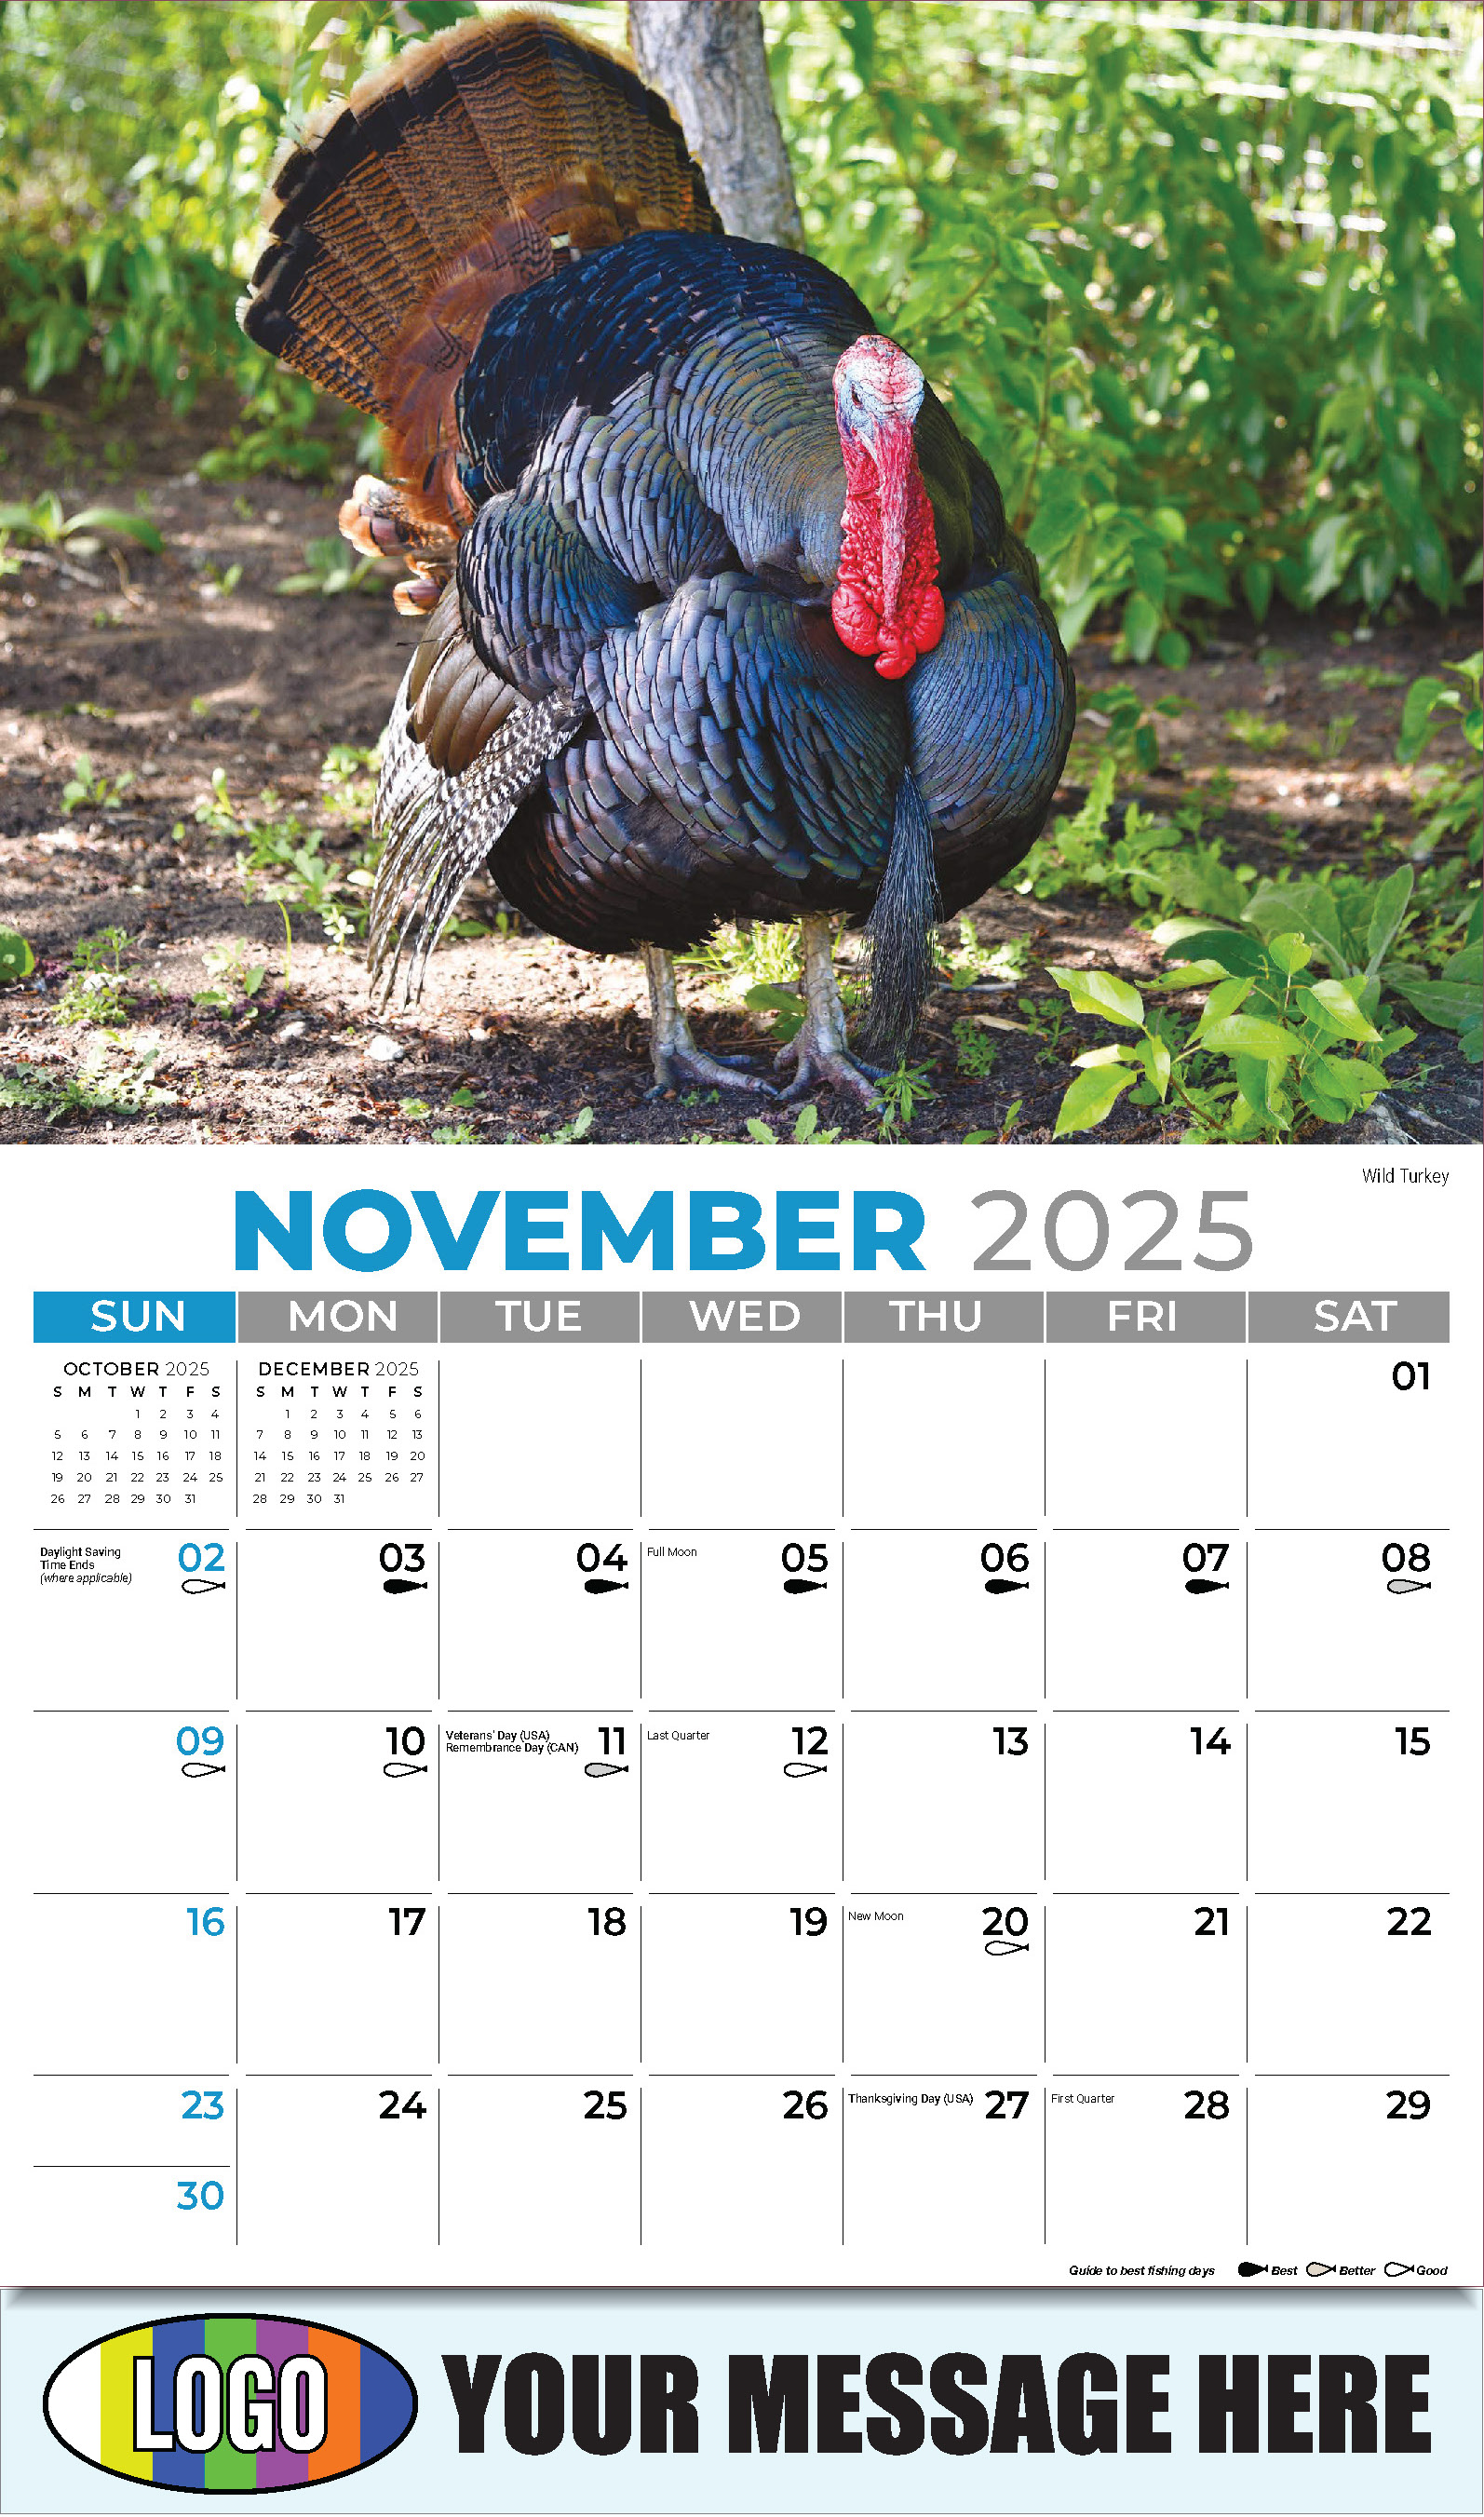 North American Wildlife 2025 Business Promo Wall Calendar - November